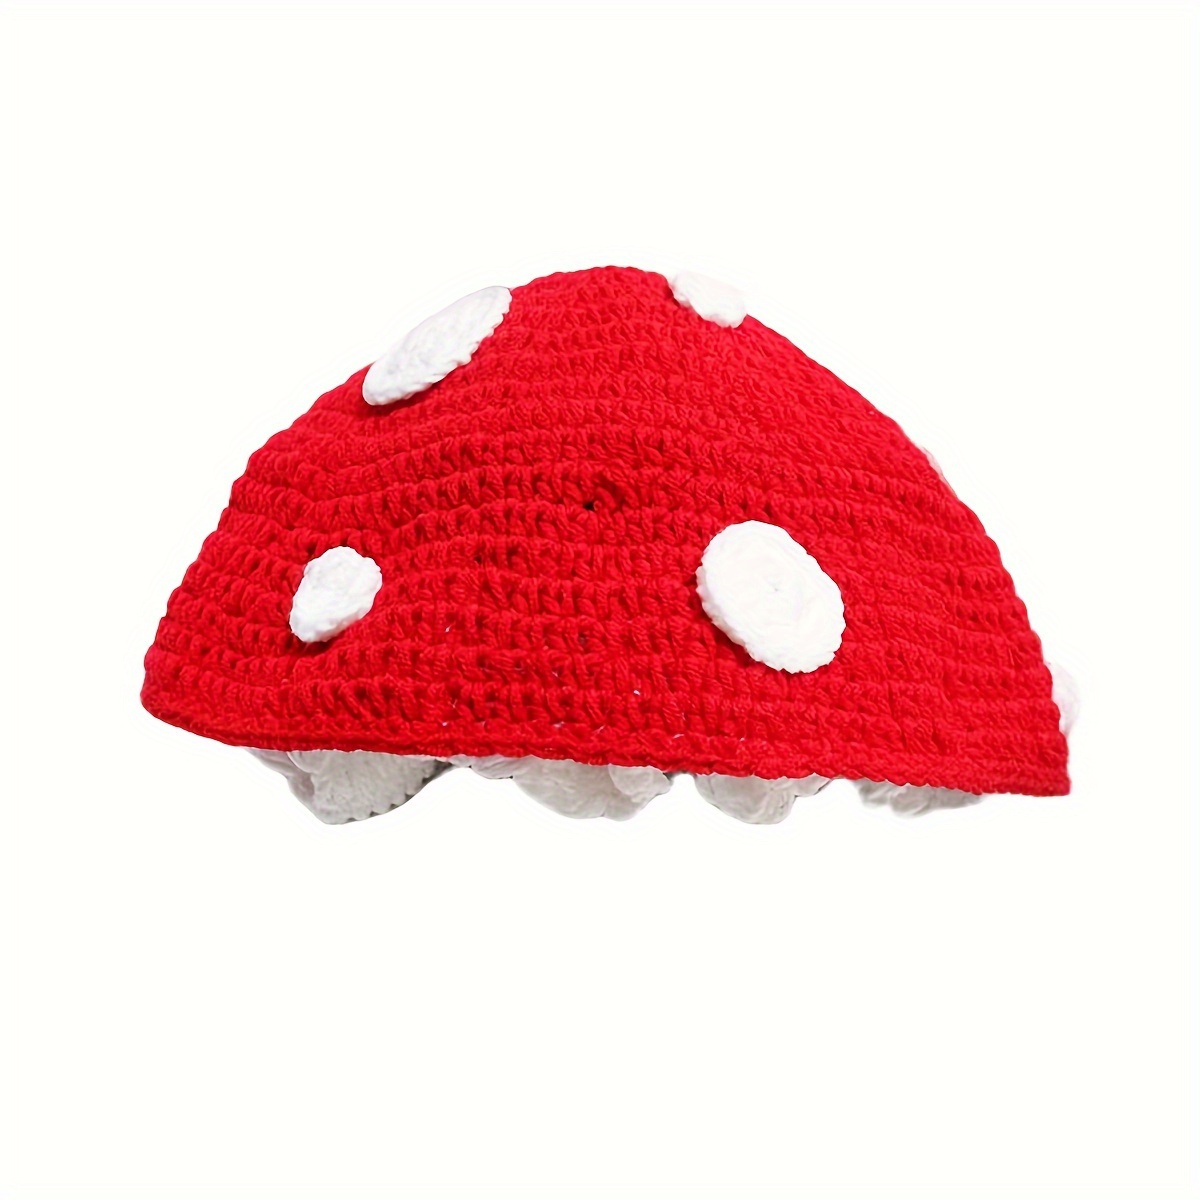 Trendy Large Red Mushroom Hat Cute Cartoon Oversized Beret Hats Lightweight Elastic Knit Cap For Women Girls